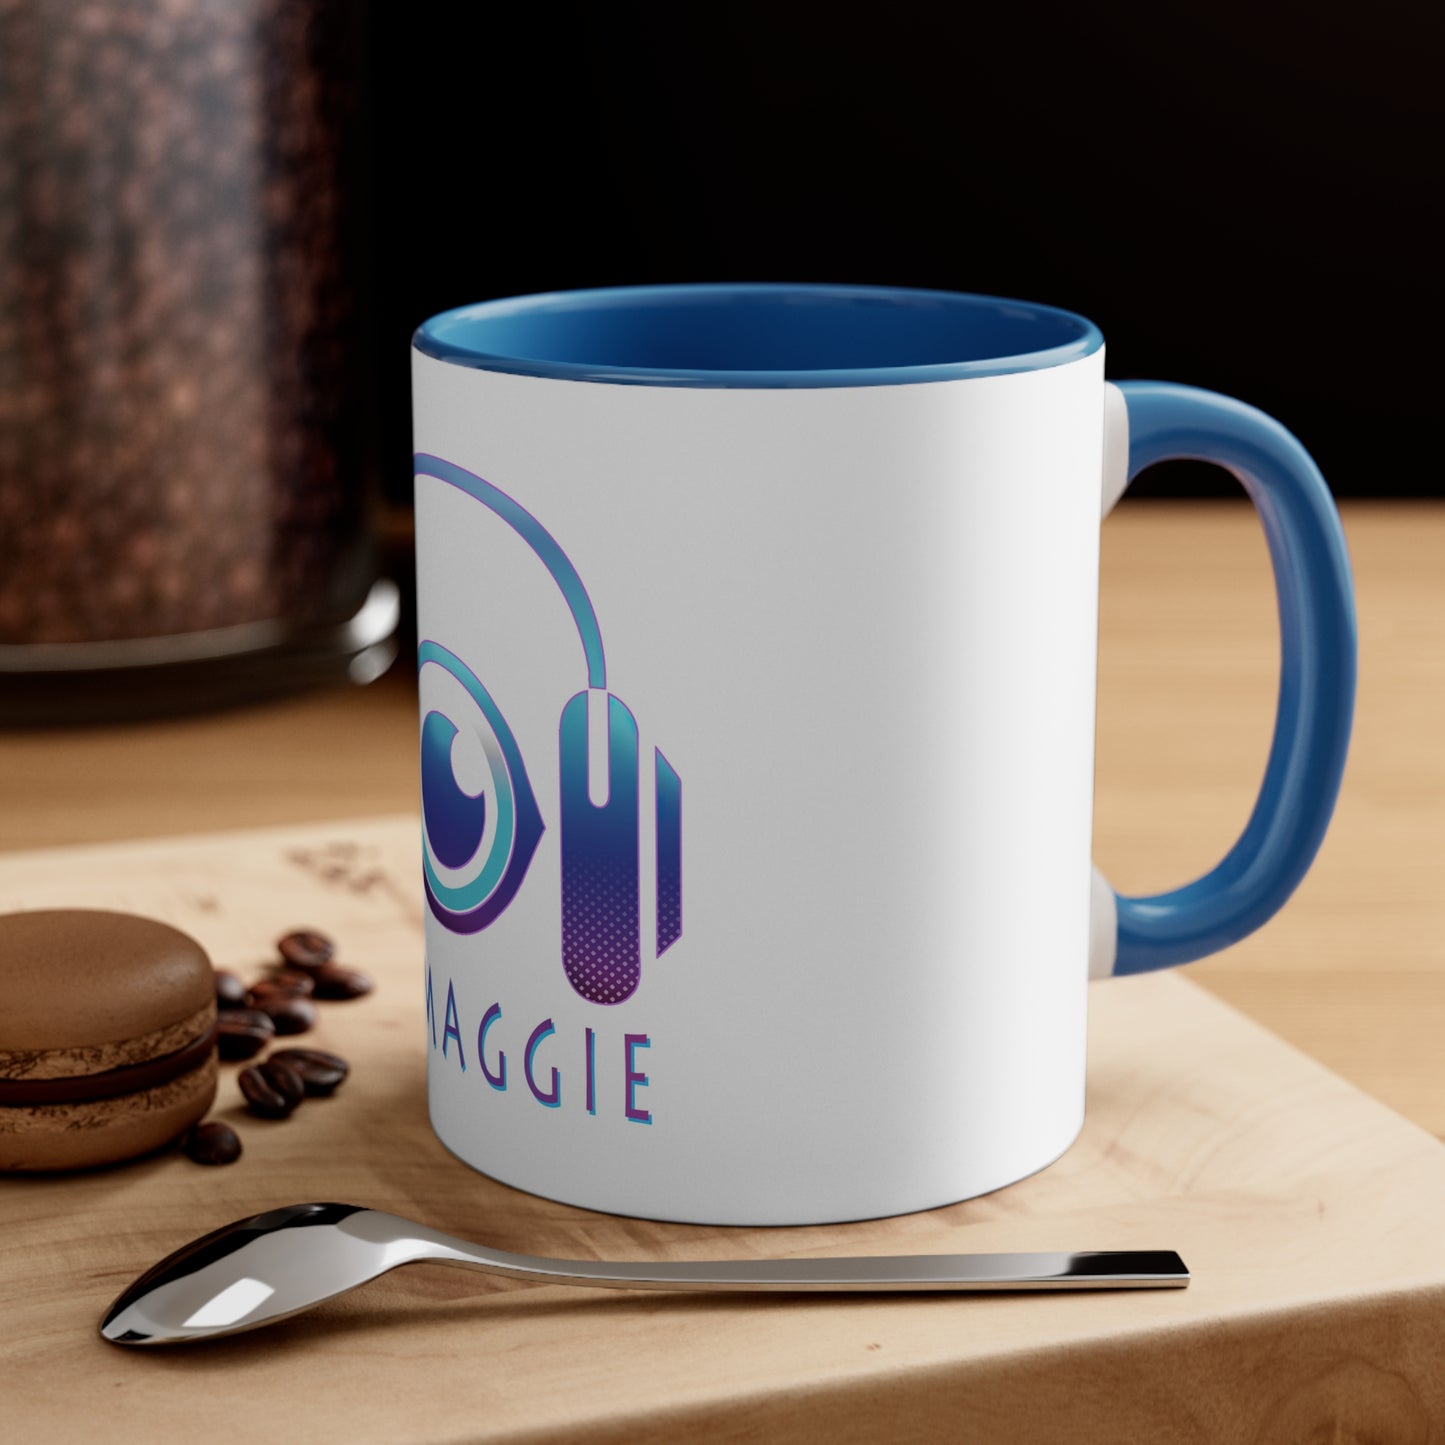 DJ Maggie HueBrew Accent Coffee Mug, 11oz